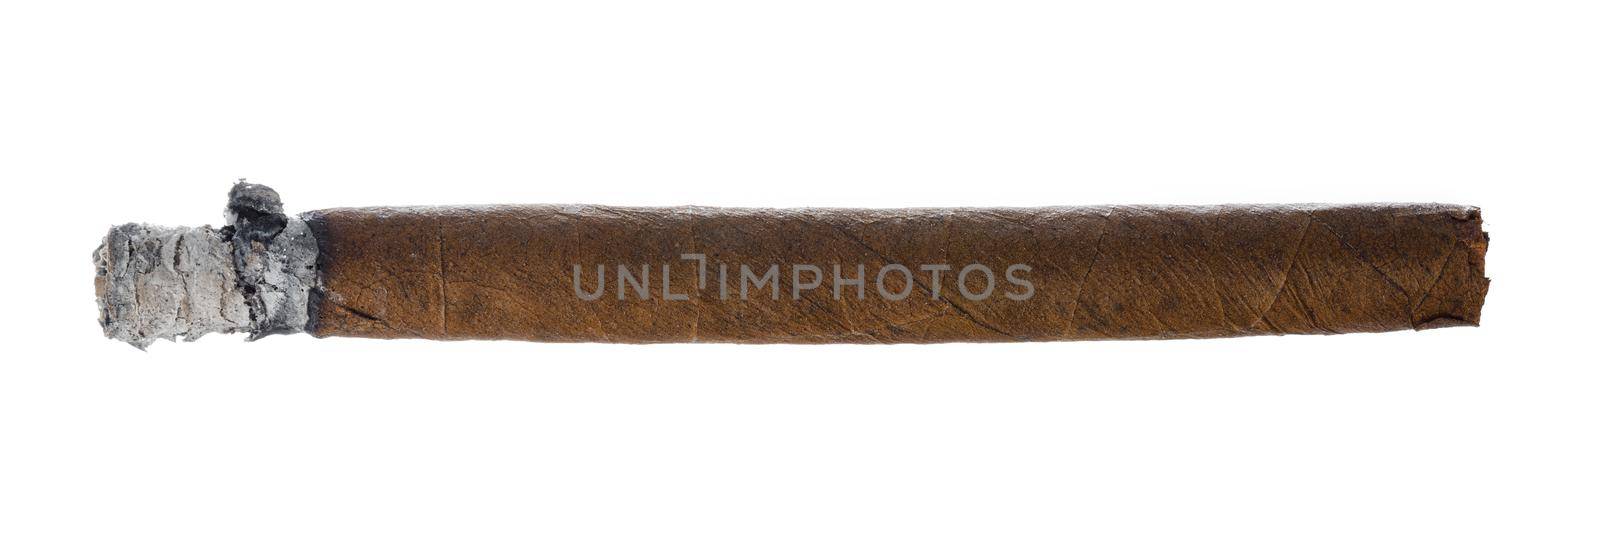 Burning hand rolled cigar isolated on white background